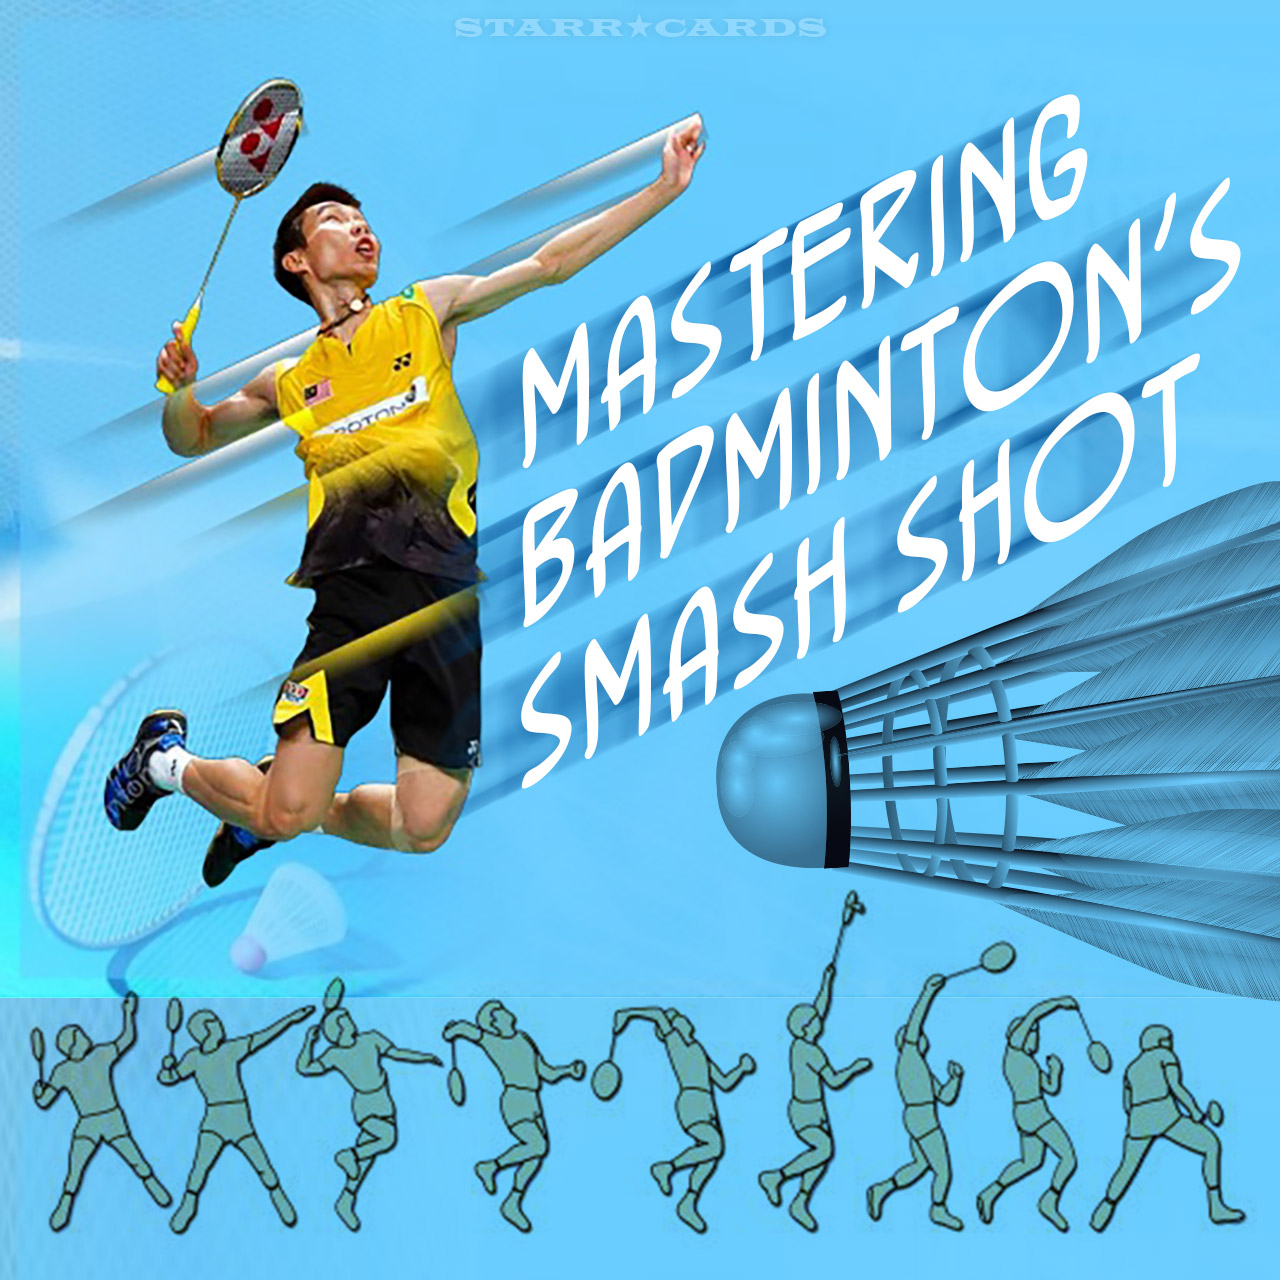 World fastest badminton smash